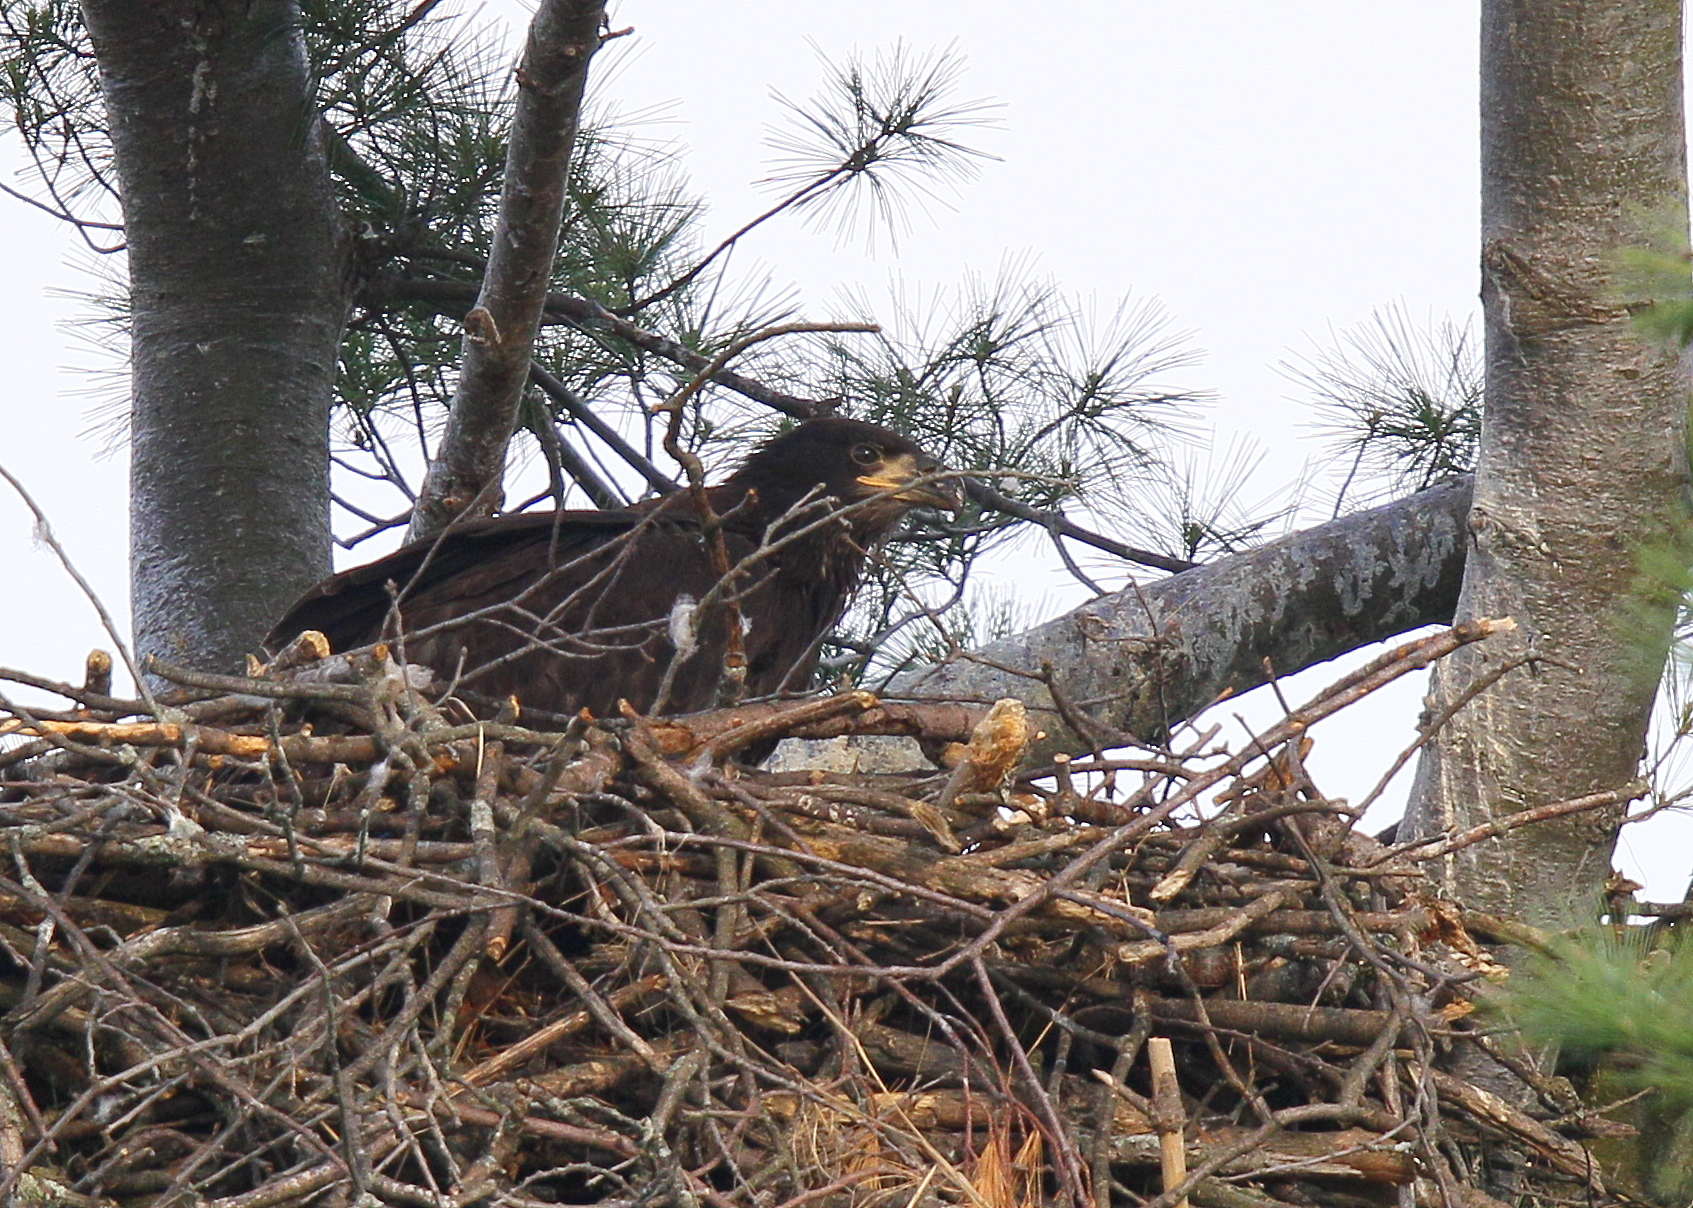 Bald Eagle chick in nest alone